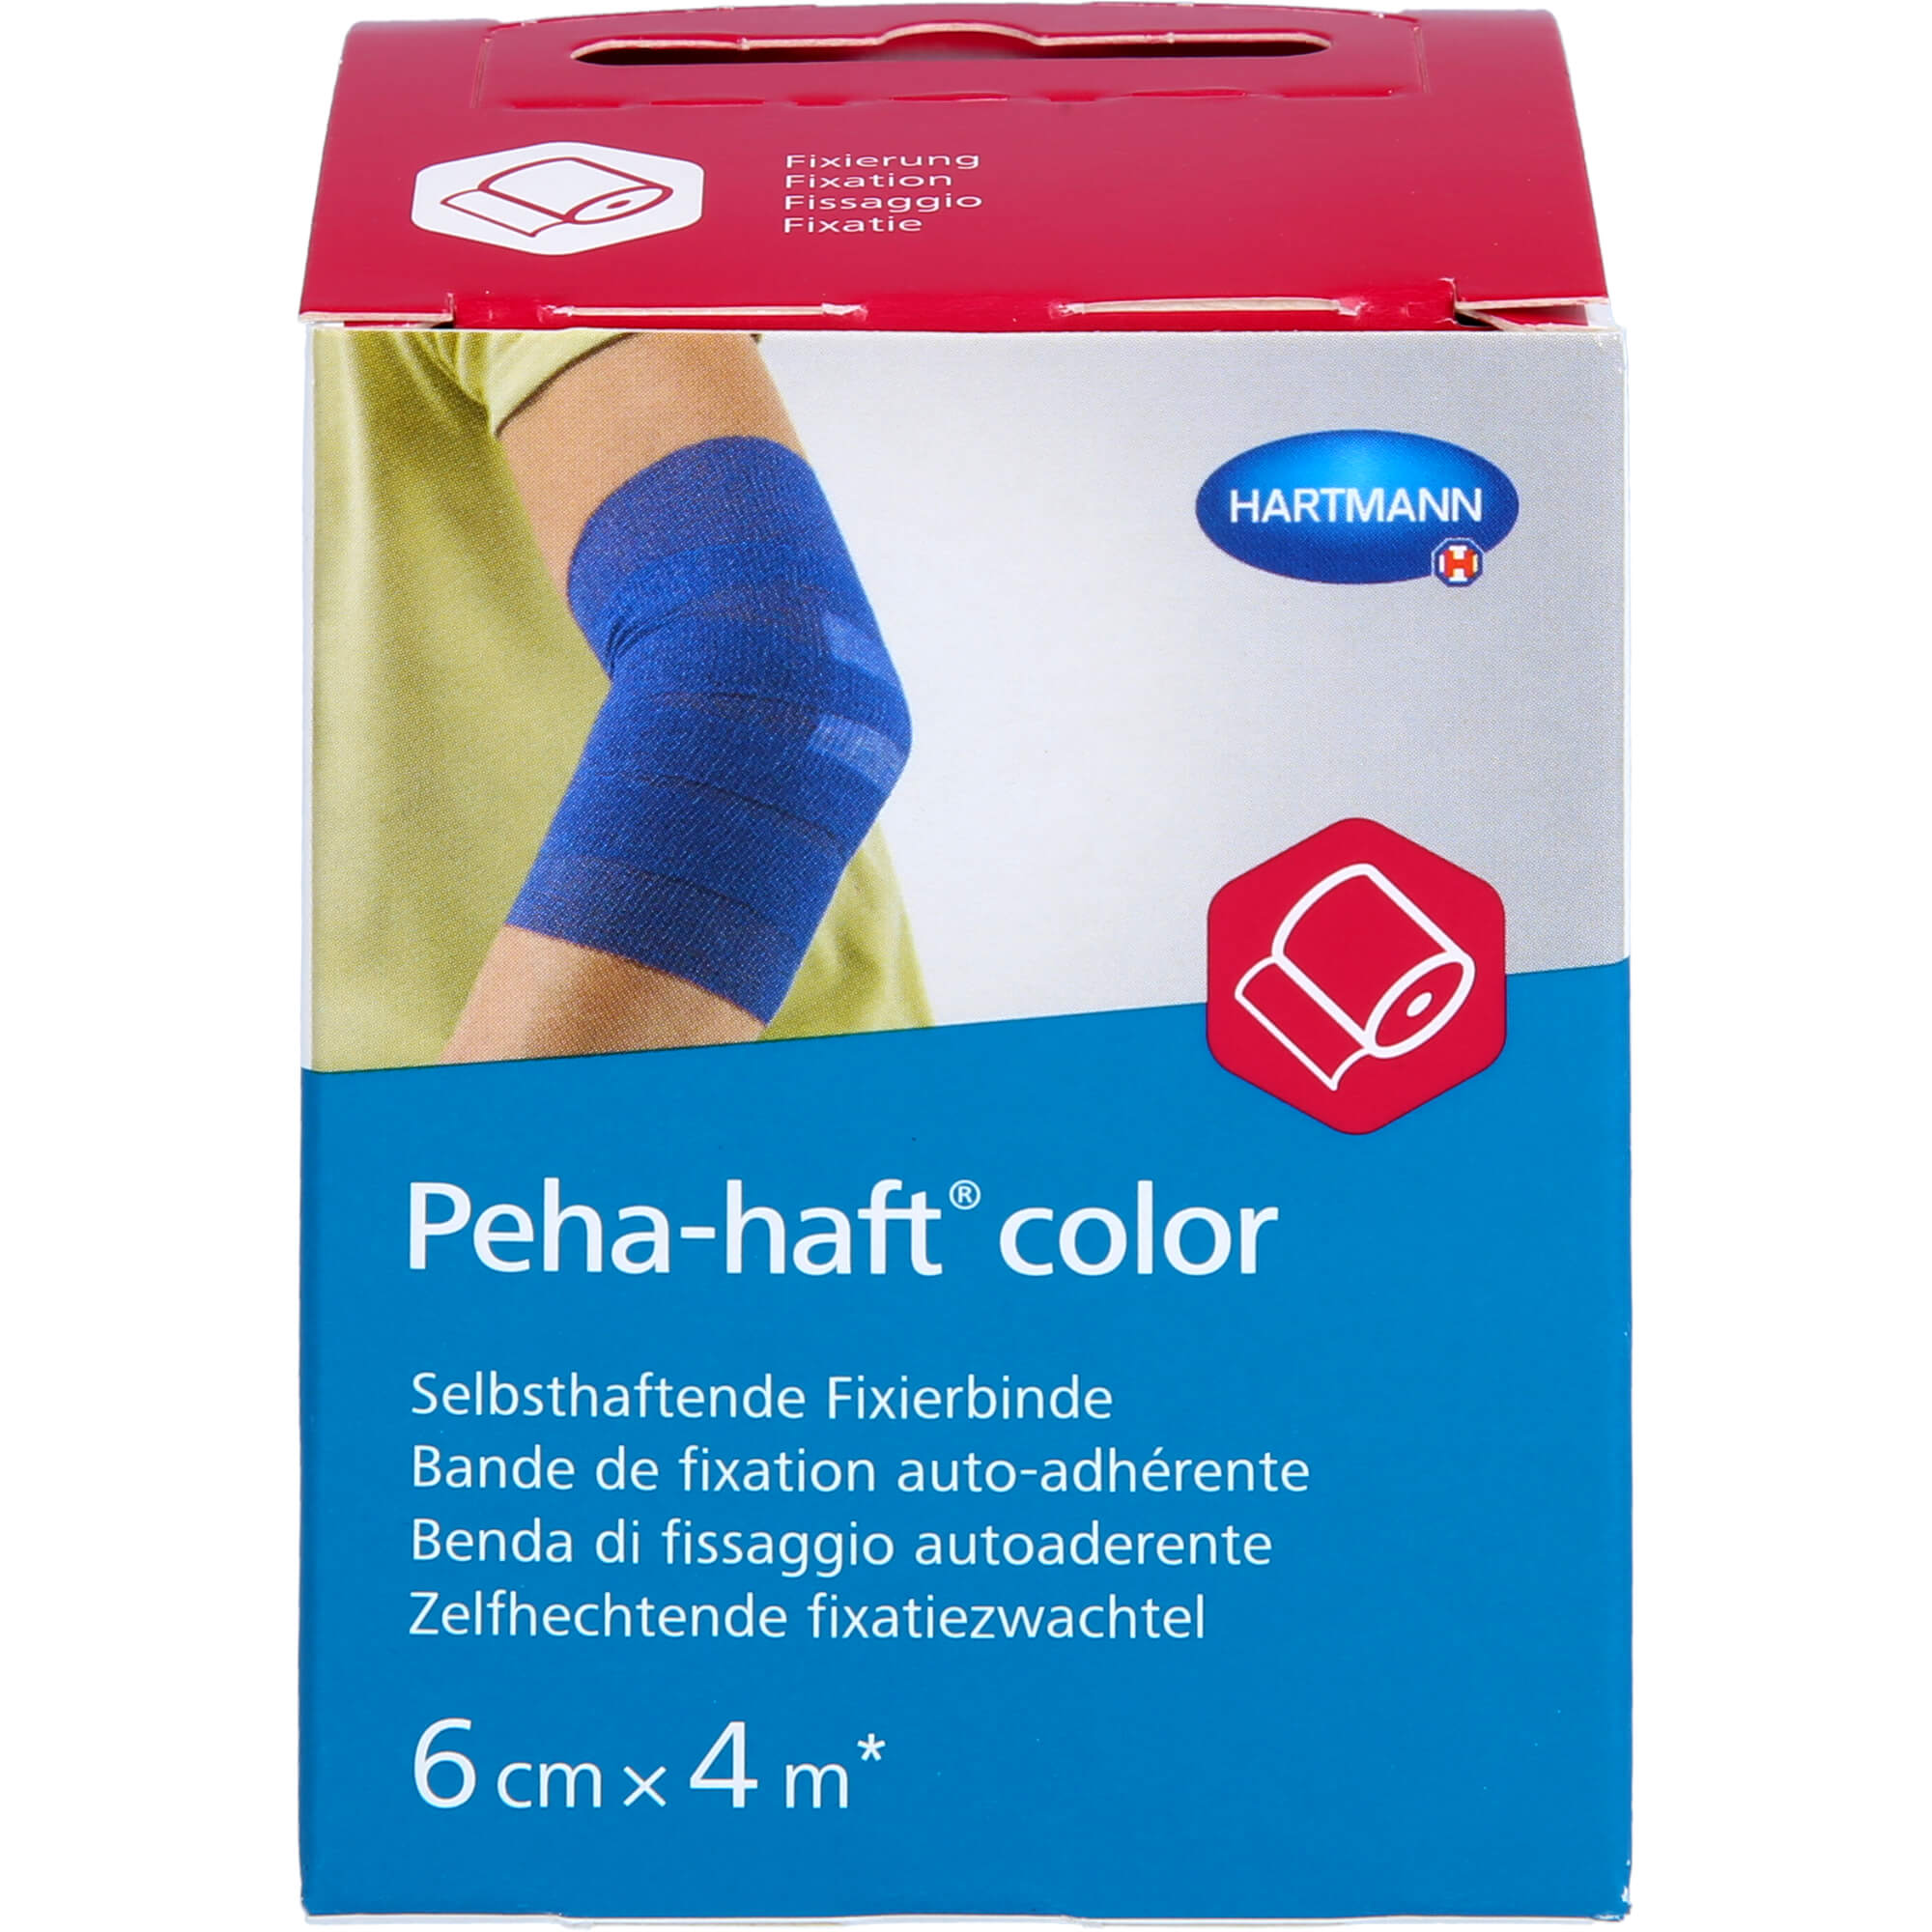 PEHA-HAFT Color Fixierbinde 6 cmx4 m blau